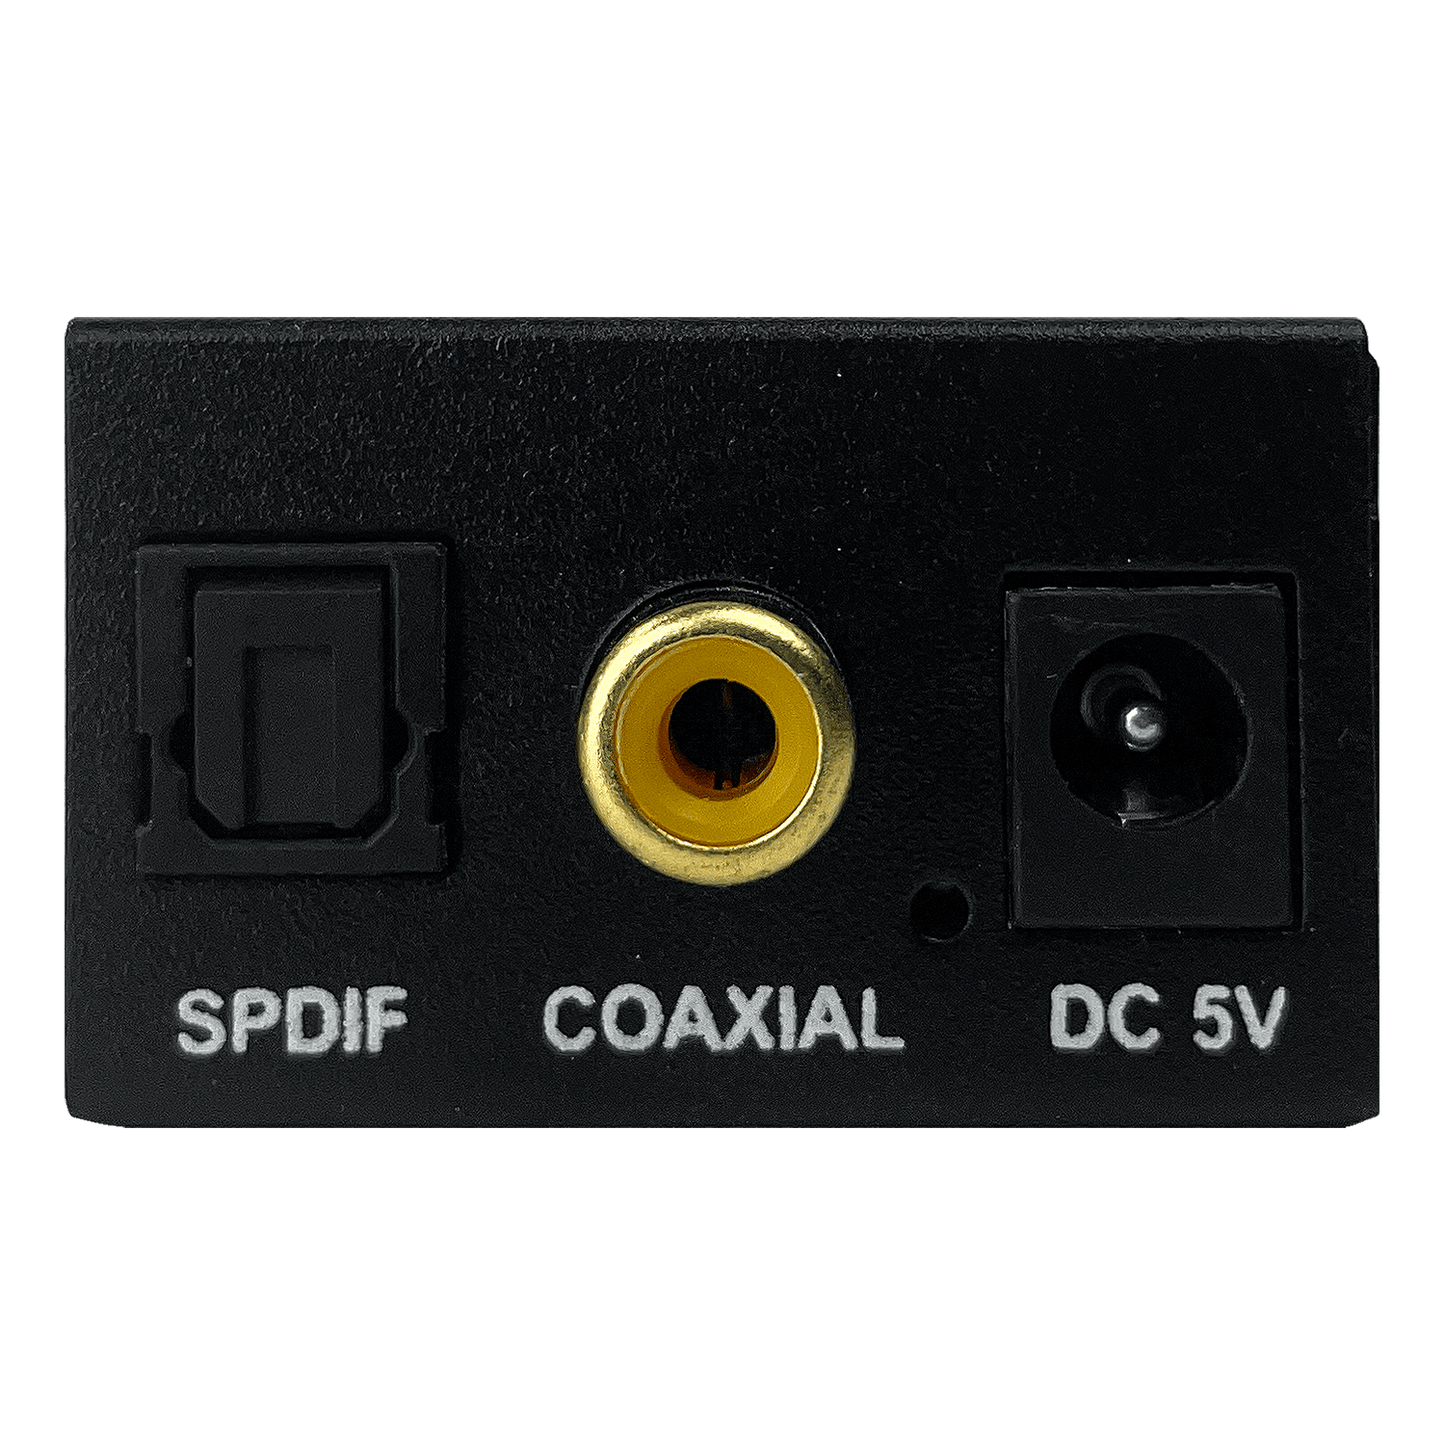 ImPro AC-98A Optical SPDIF/Coaxial Digital to RCA L/R Analog Audio Converter